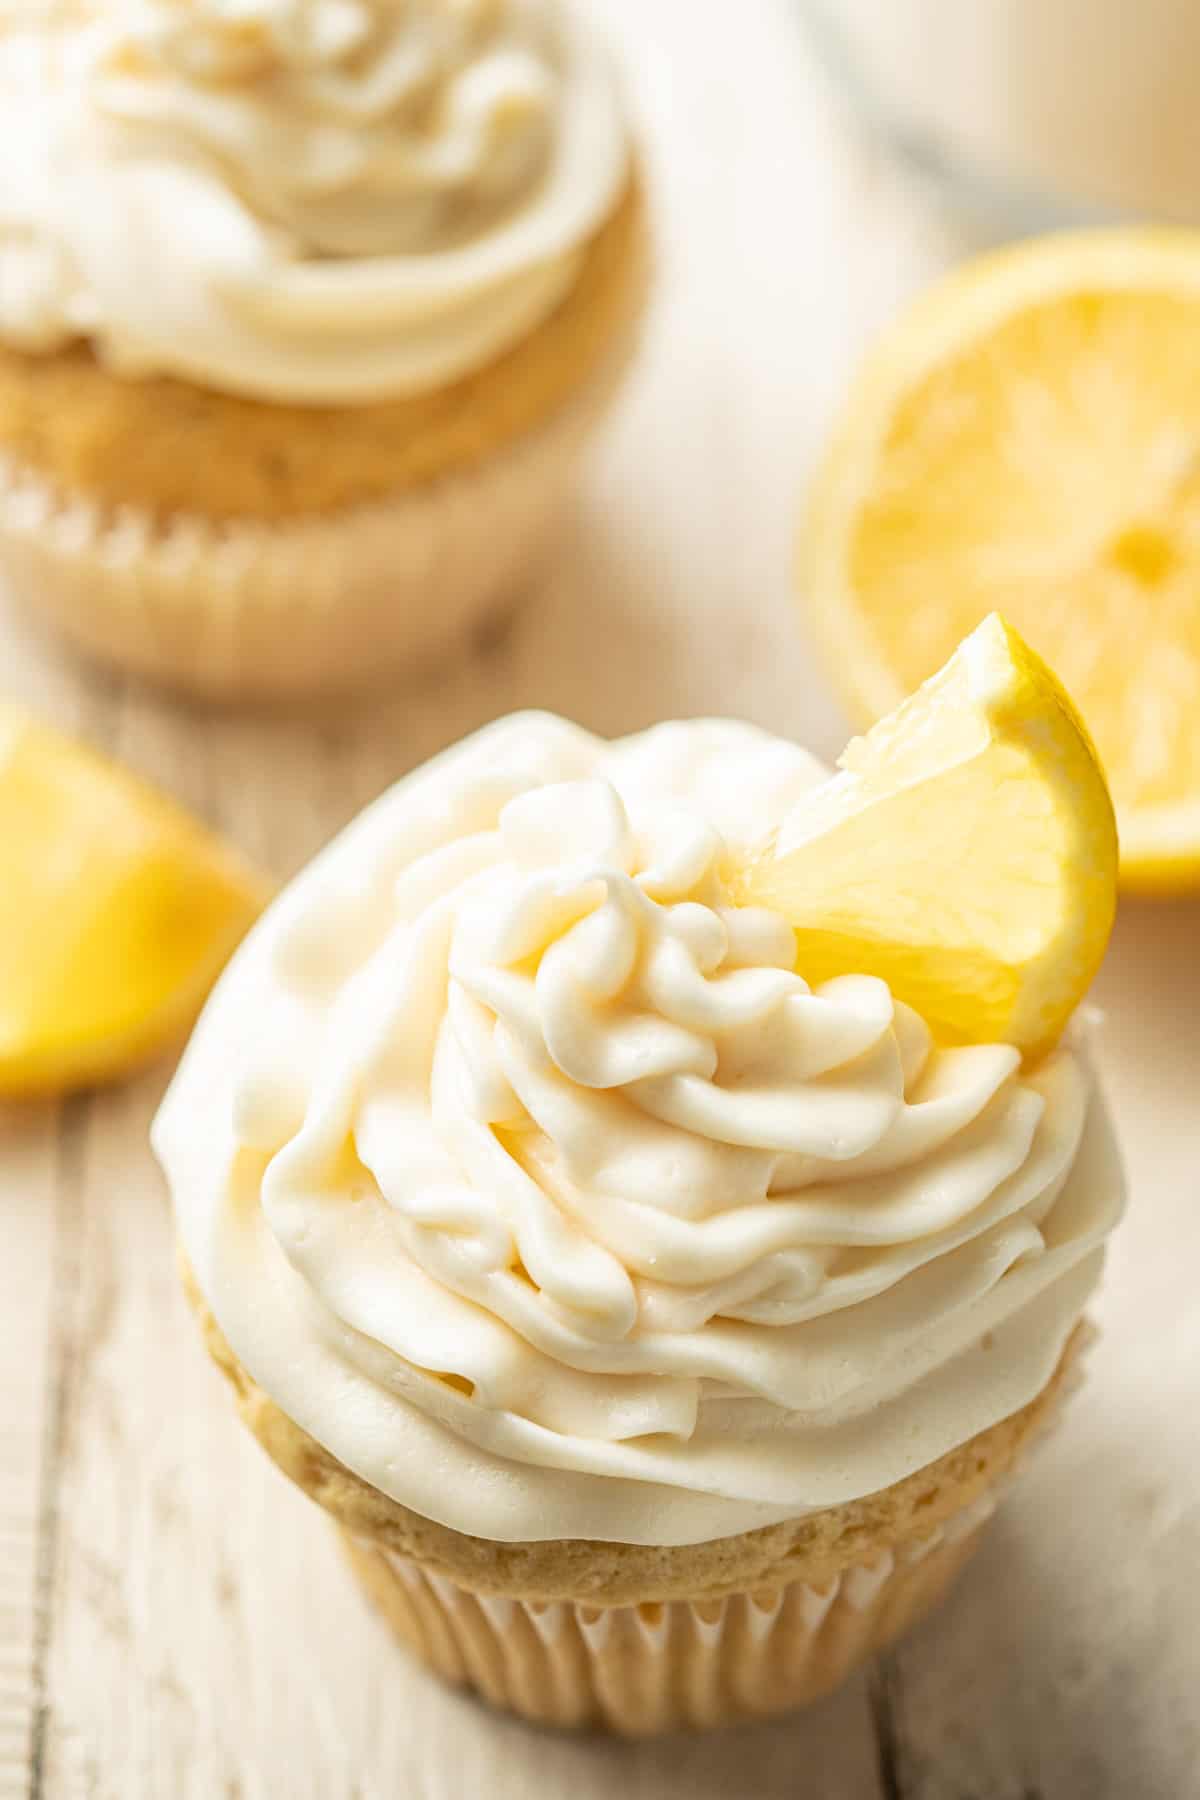 Vegan Lemon Cupcakes on a white wooden surface with lemon slices.